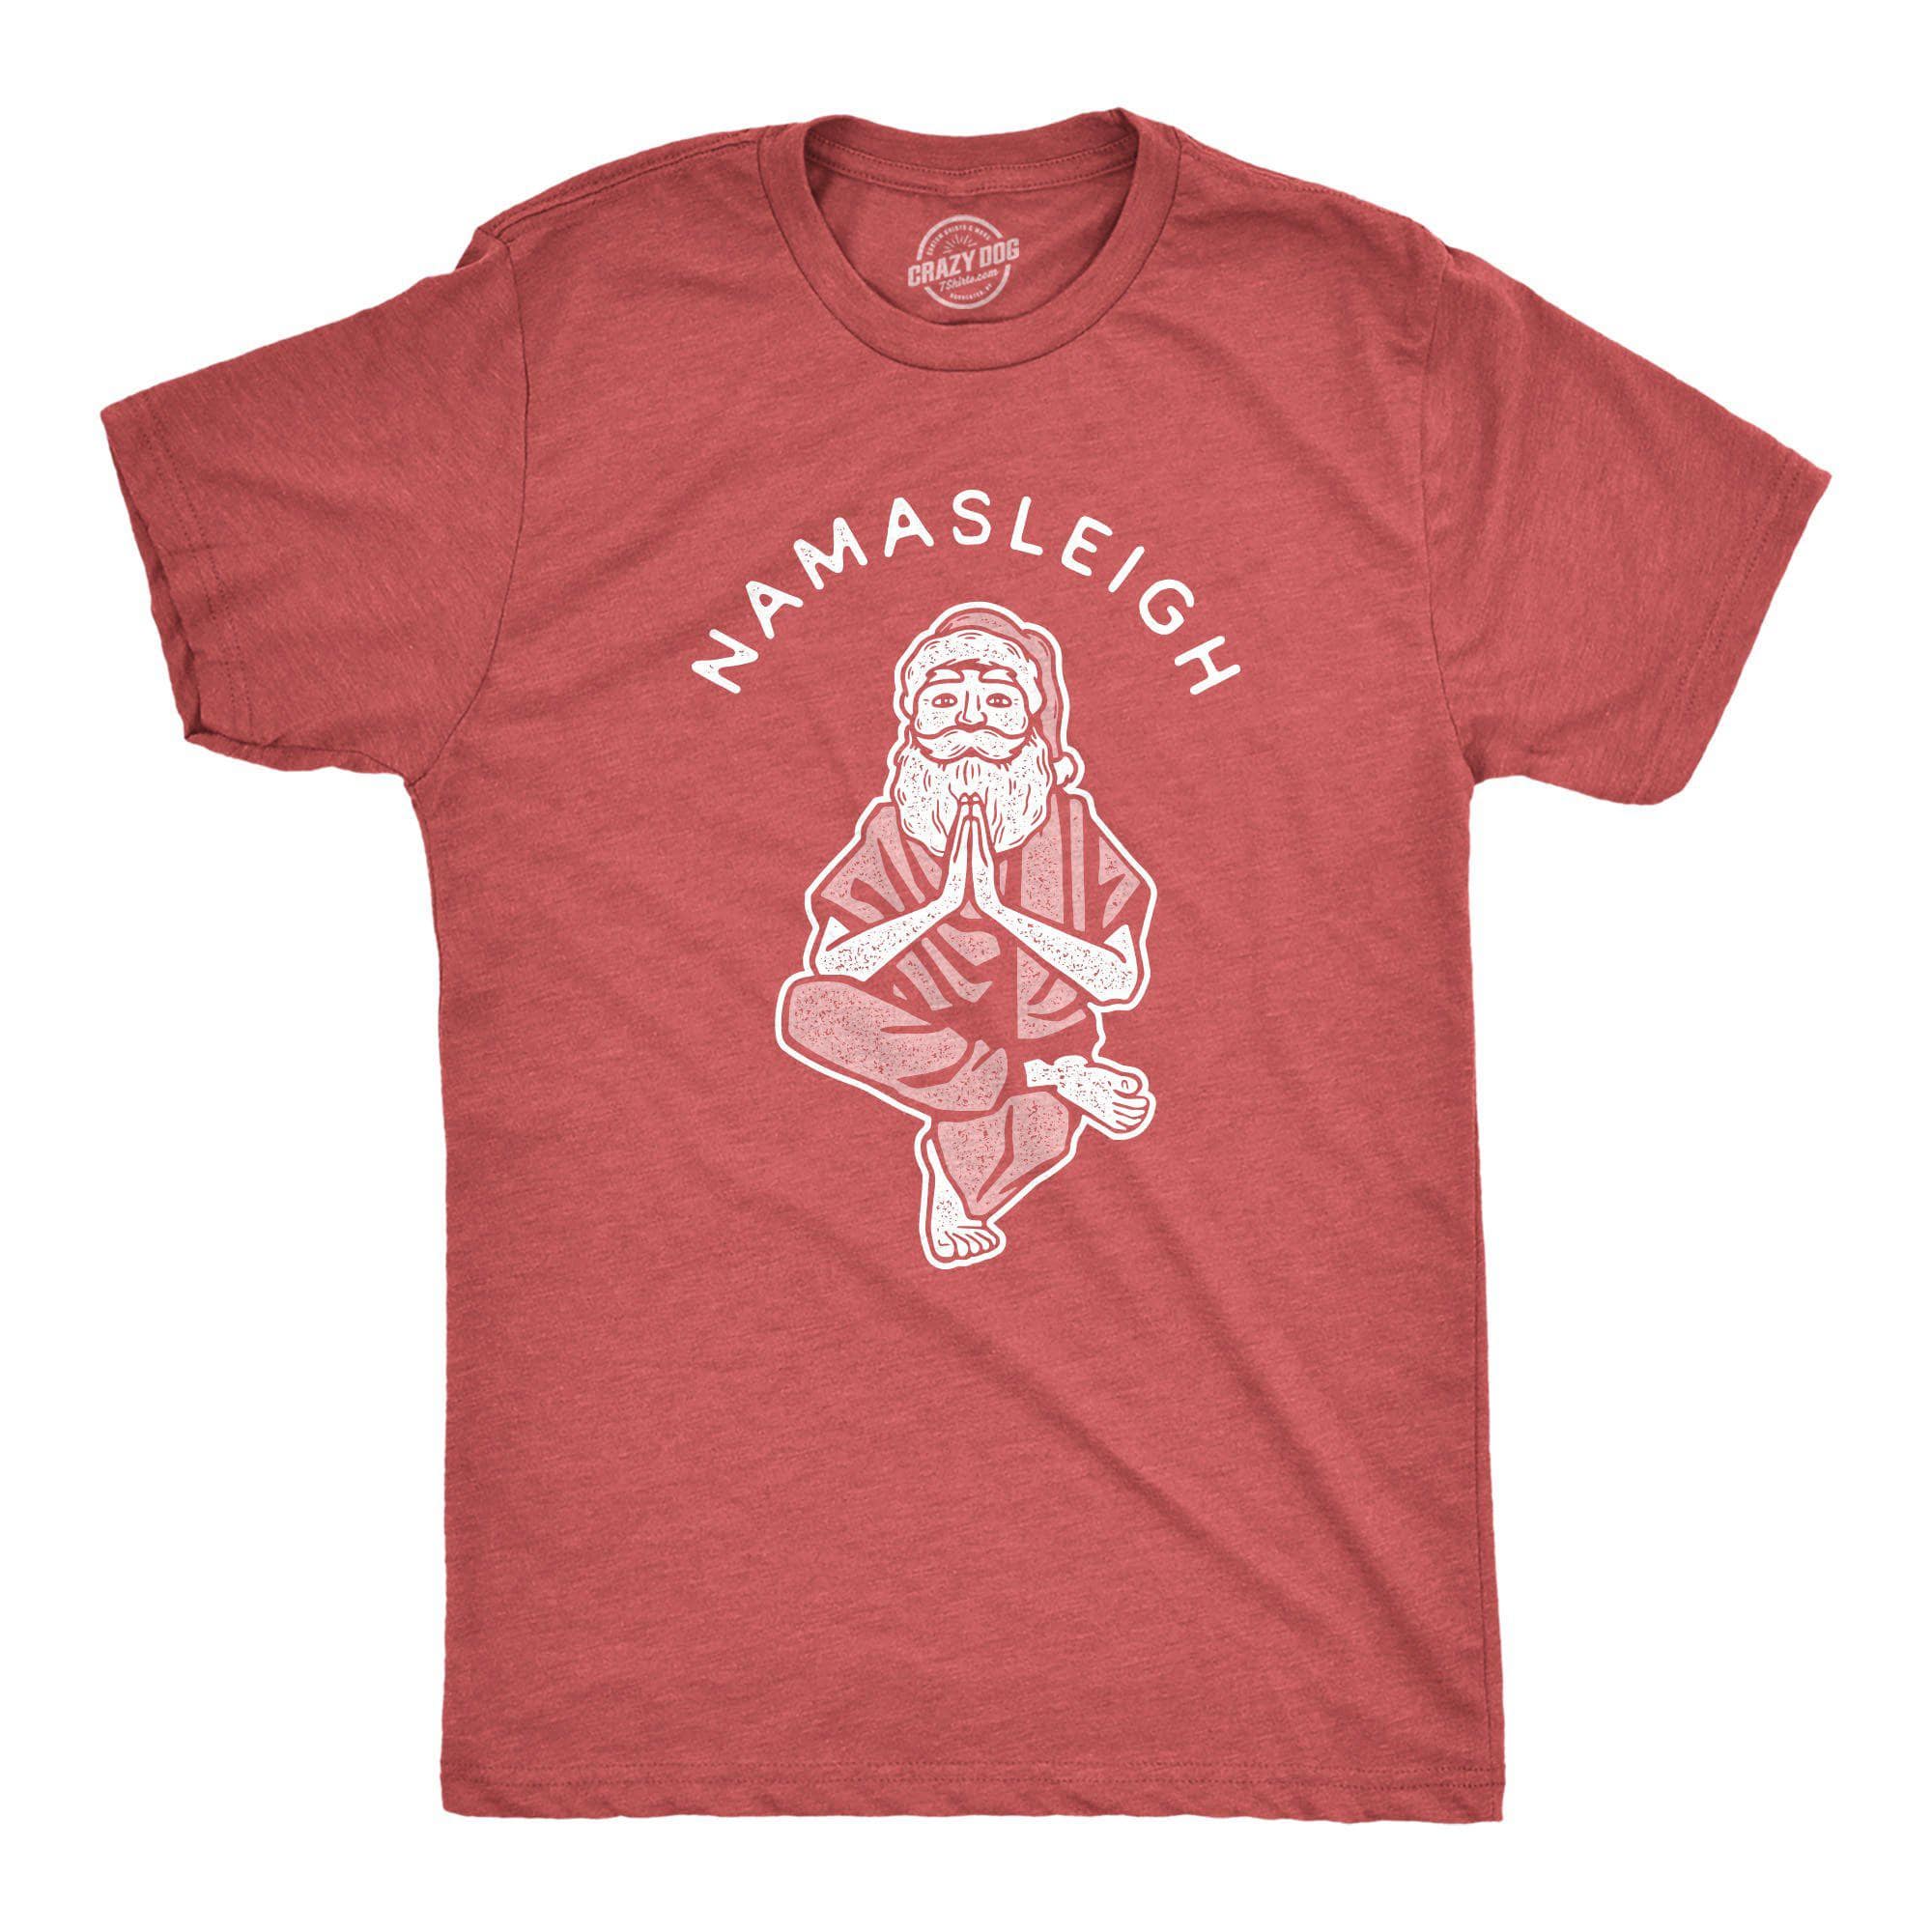 Namasleigh Men's Tshirt - Crazy Dog T-Shirts